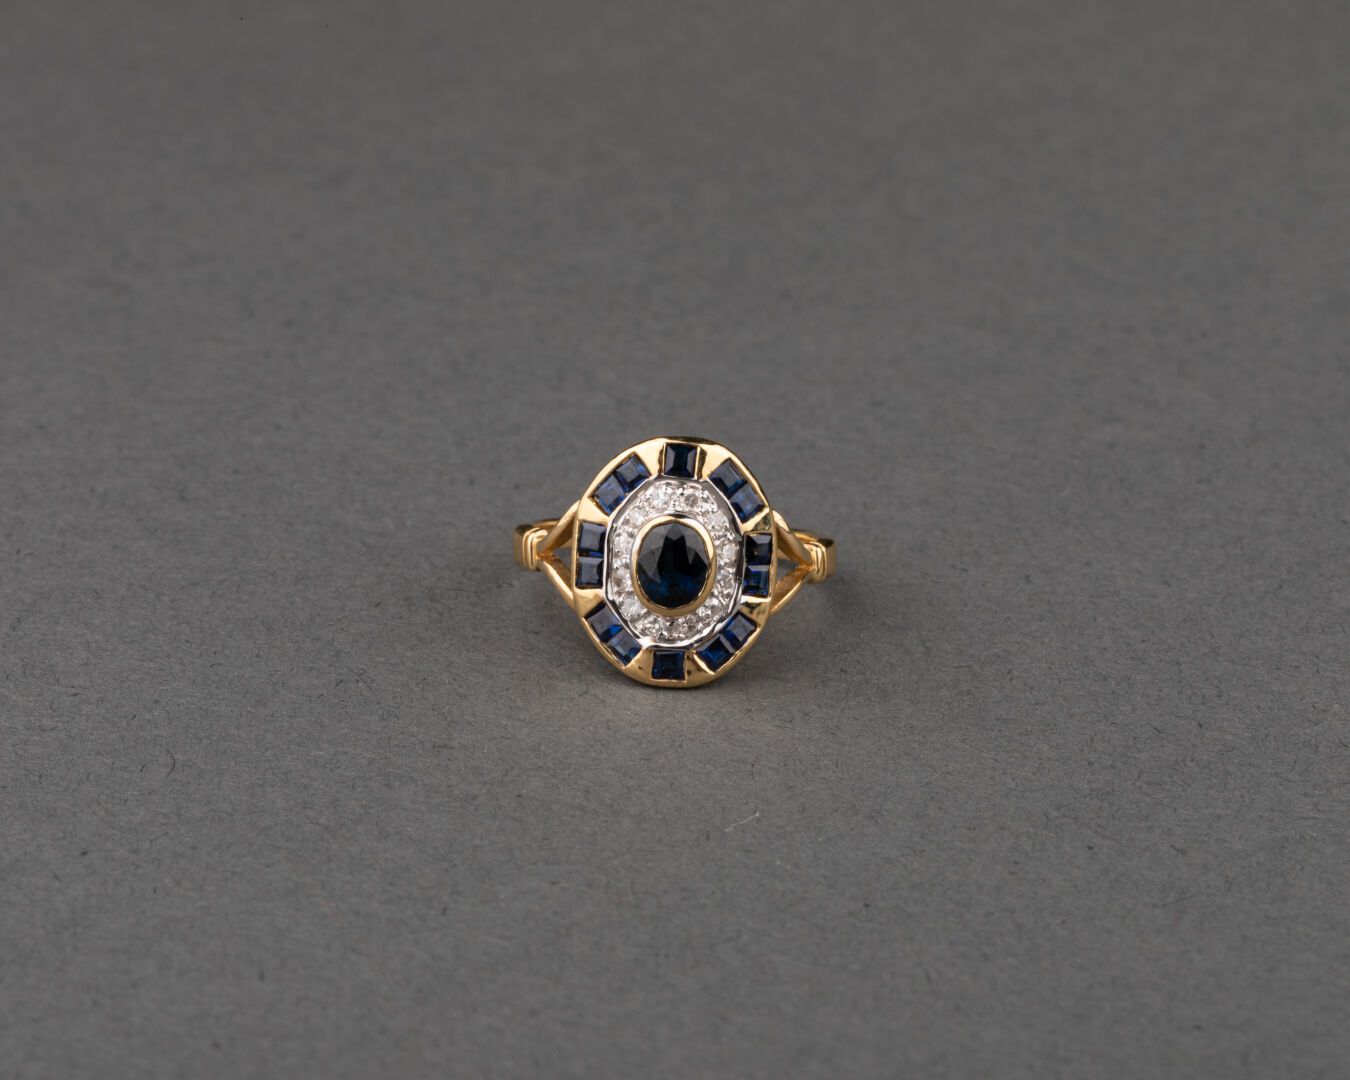 [Bijoux] 戒指

八角形表圈上镶嵌着蓝色尖晶石，背景辉煌。

黃金

毛重 3,9 g